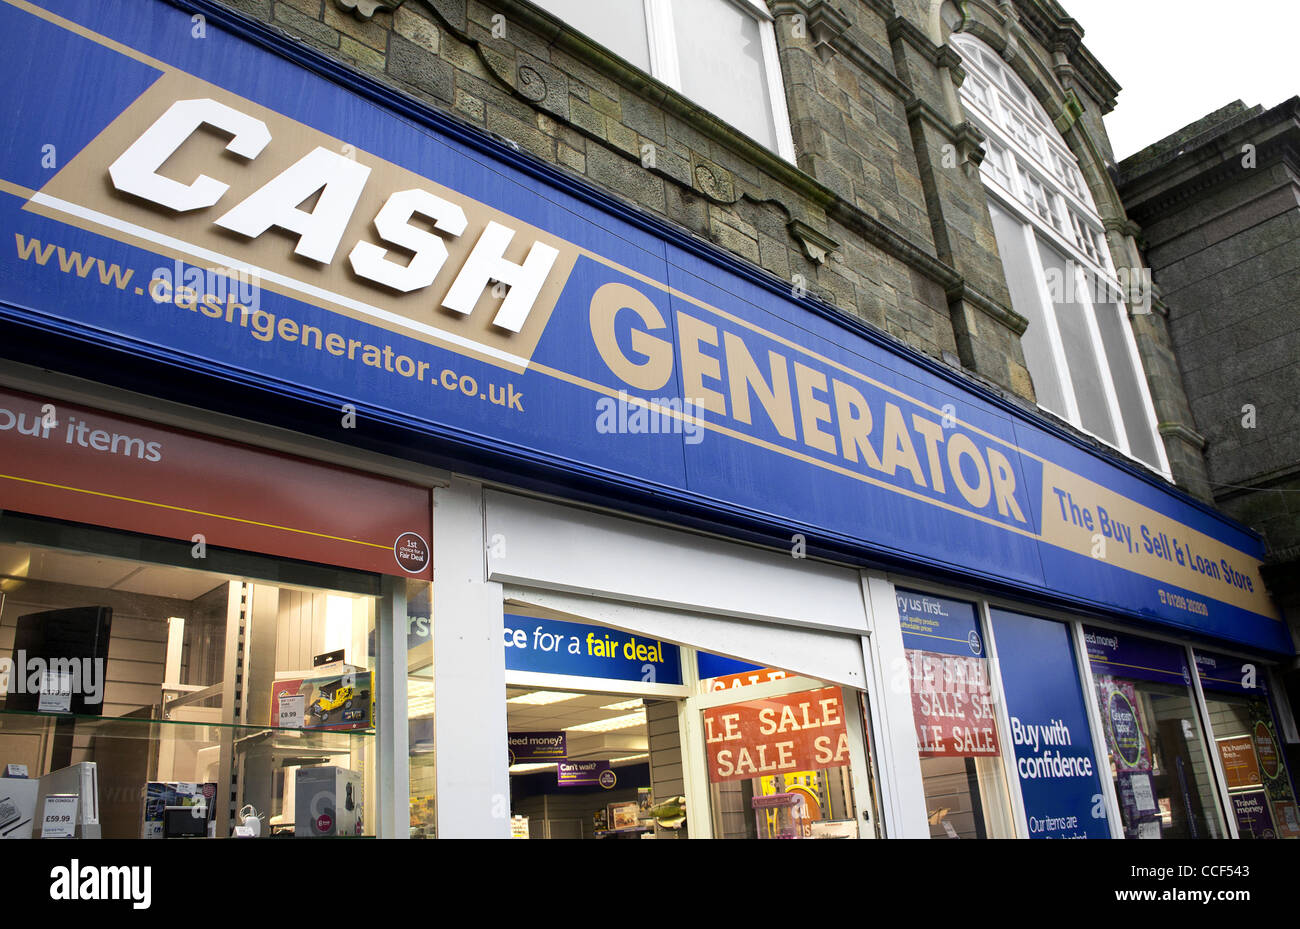 A Cash Generator store in Redruth, Cornwall, UK Stock Photo